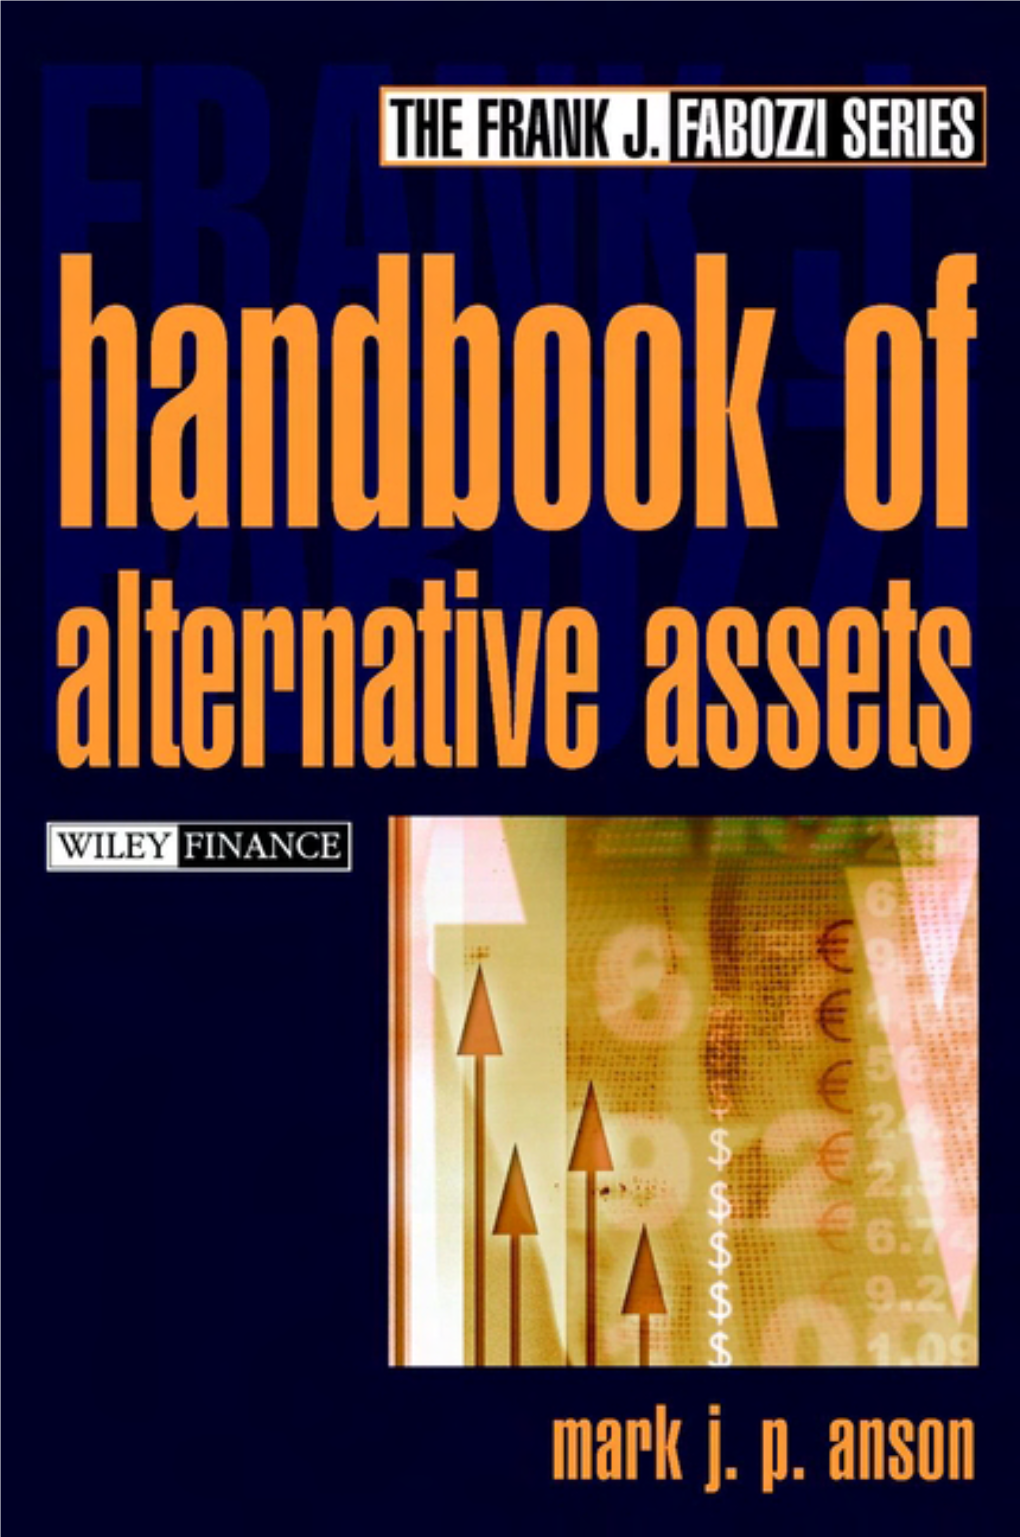 The Handbook of Alternative Assets the Frank J